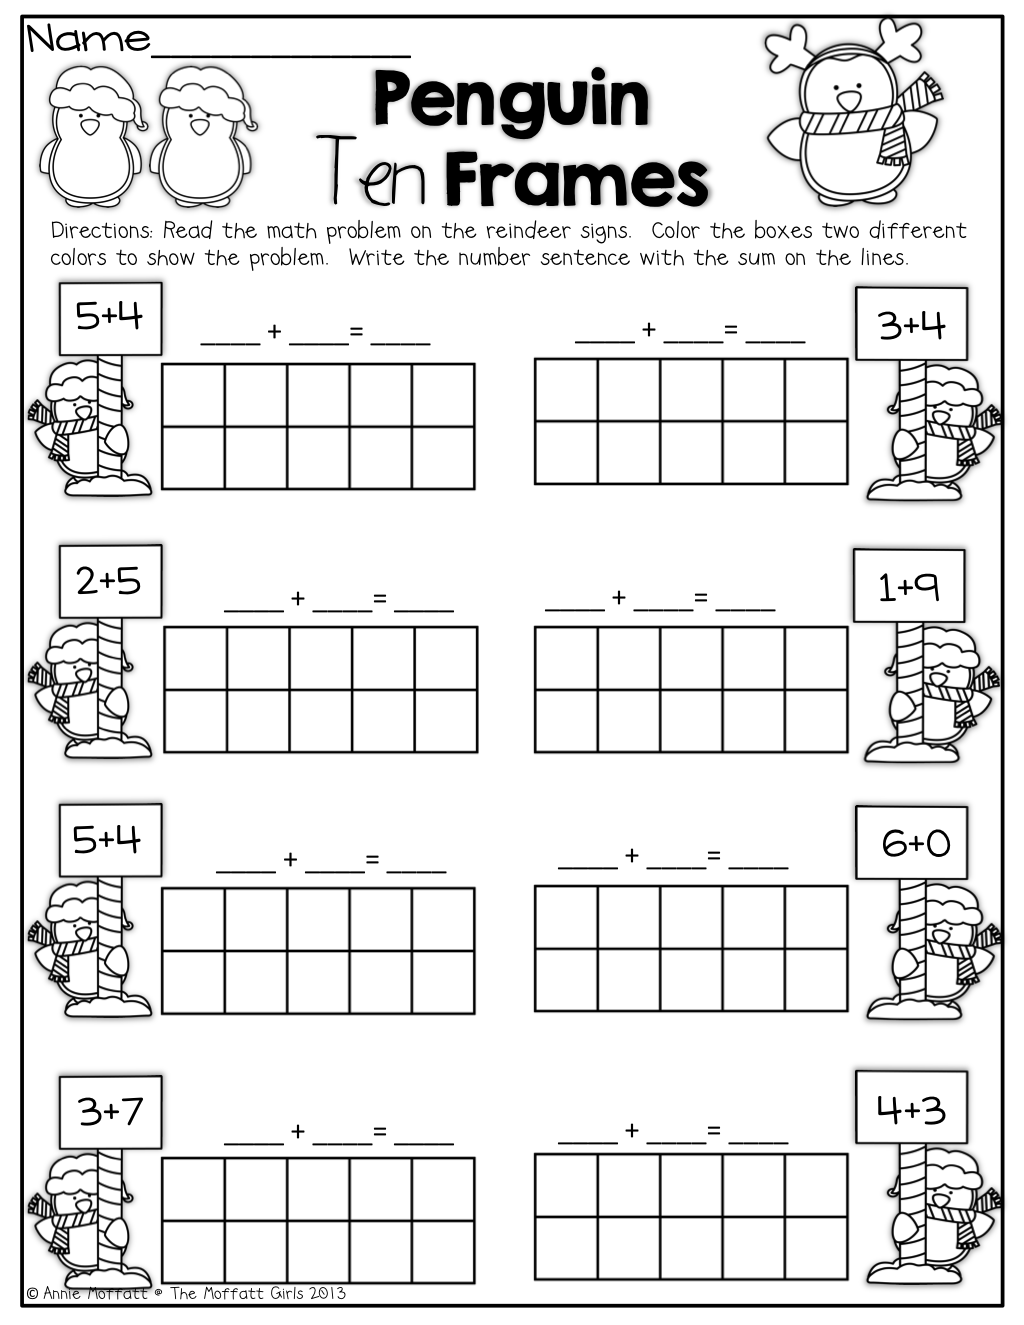 Kindergarten Penguin 10 Frames!